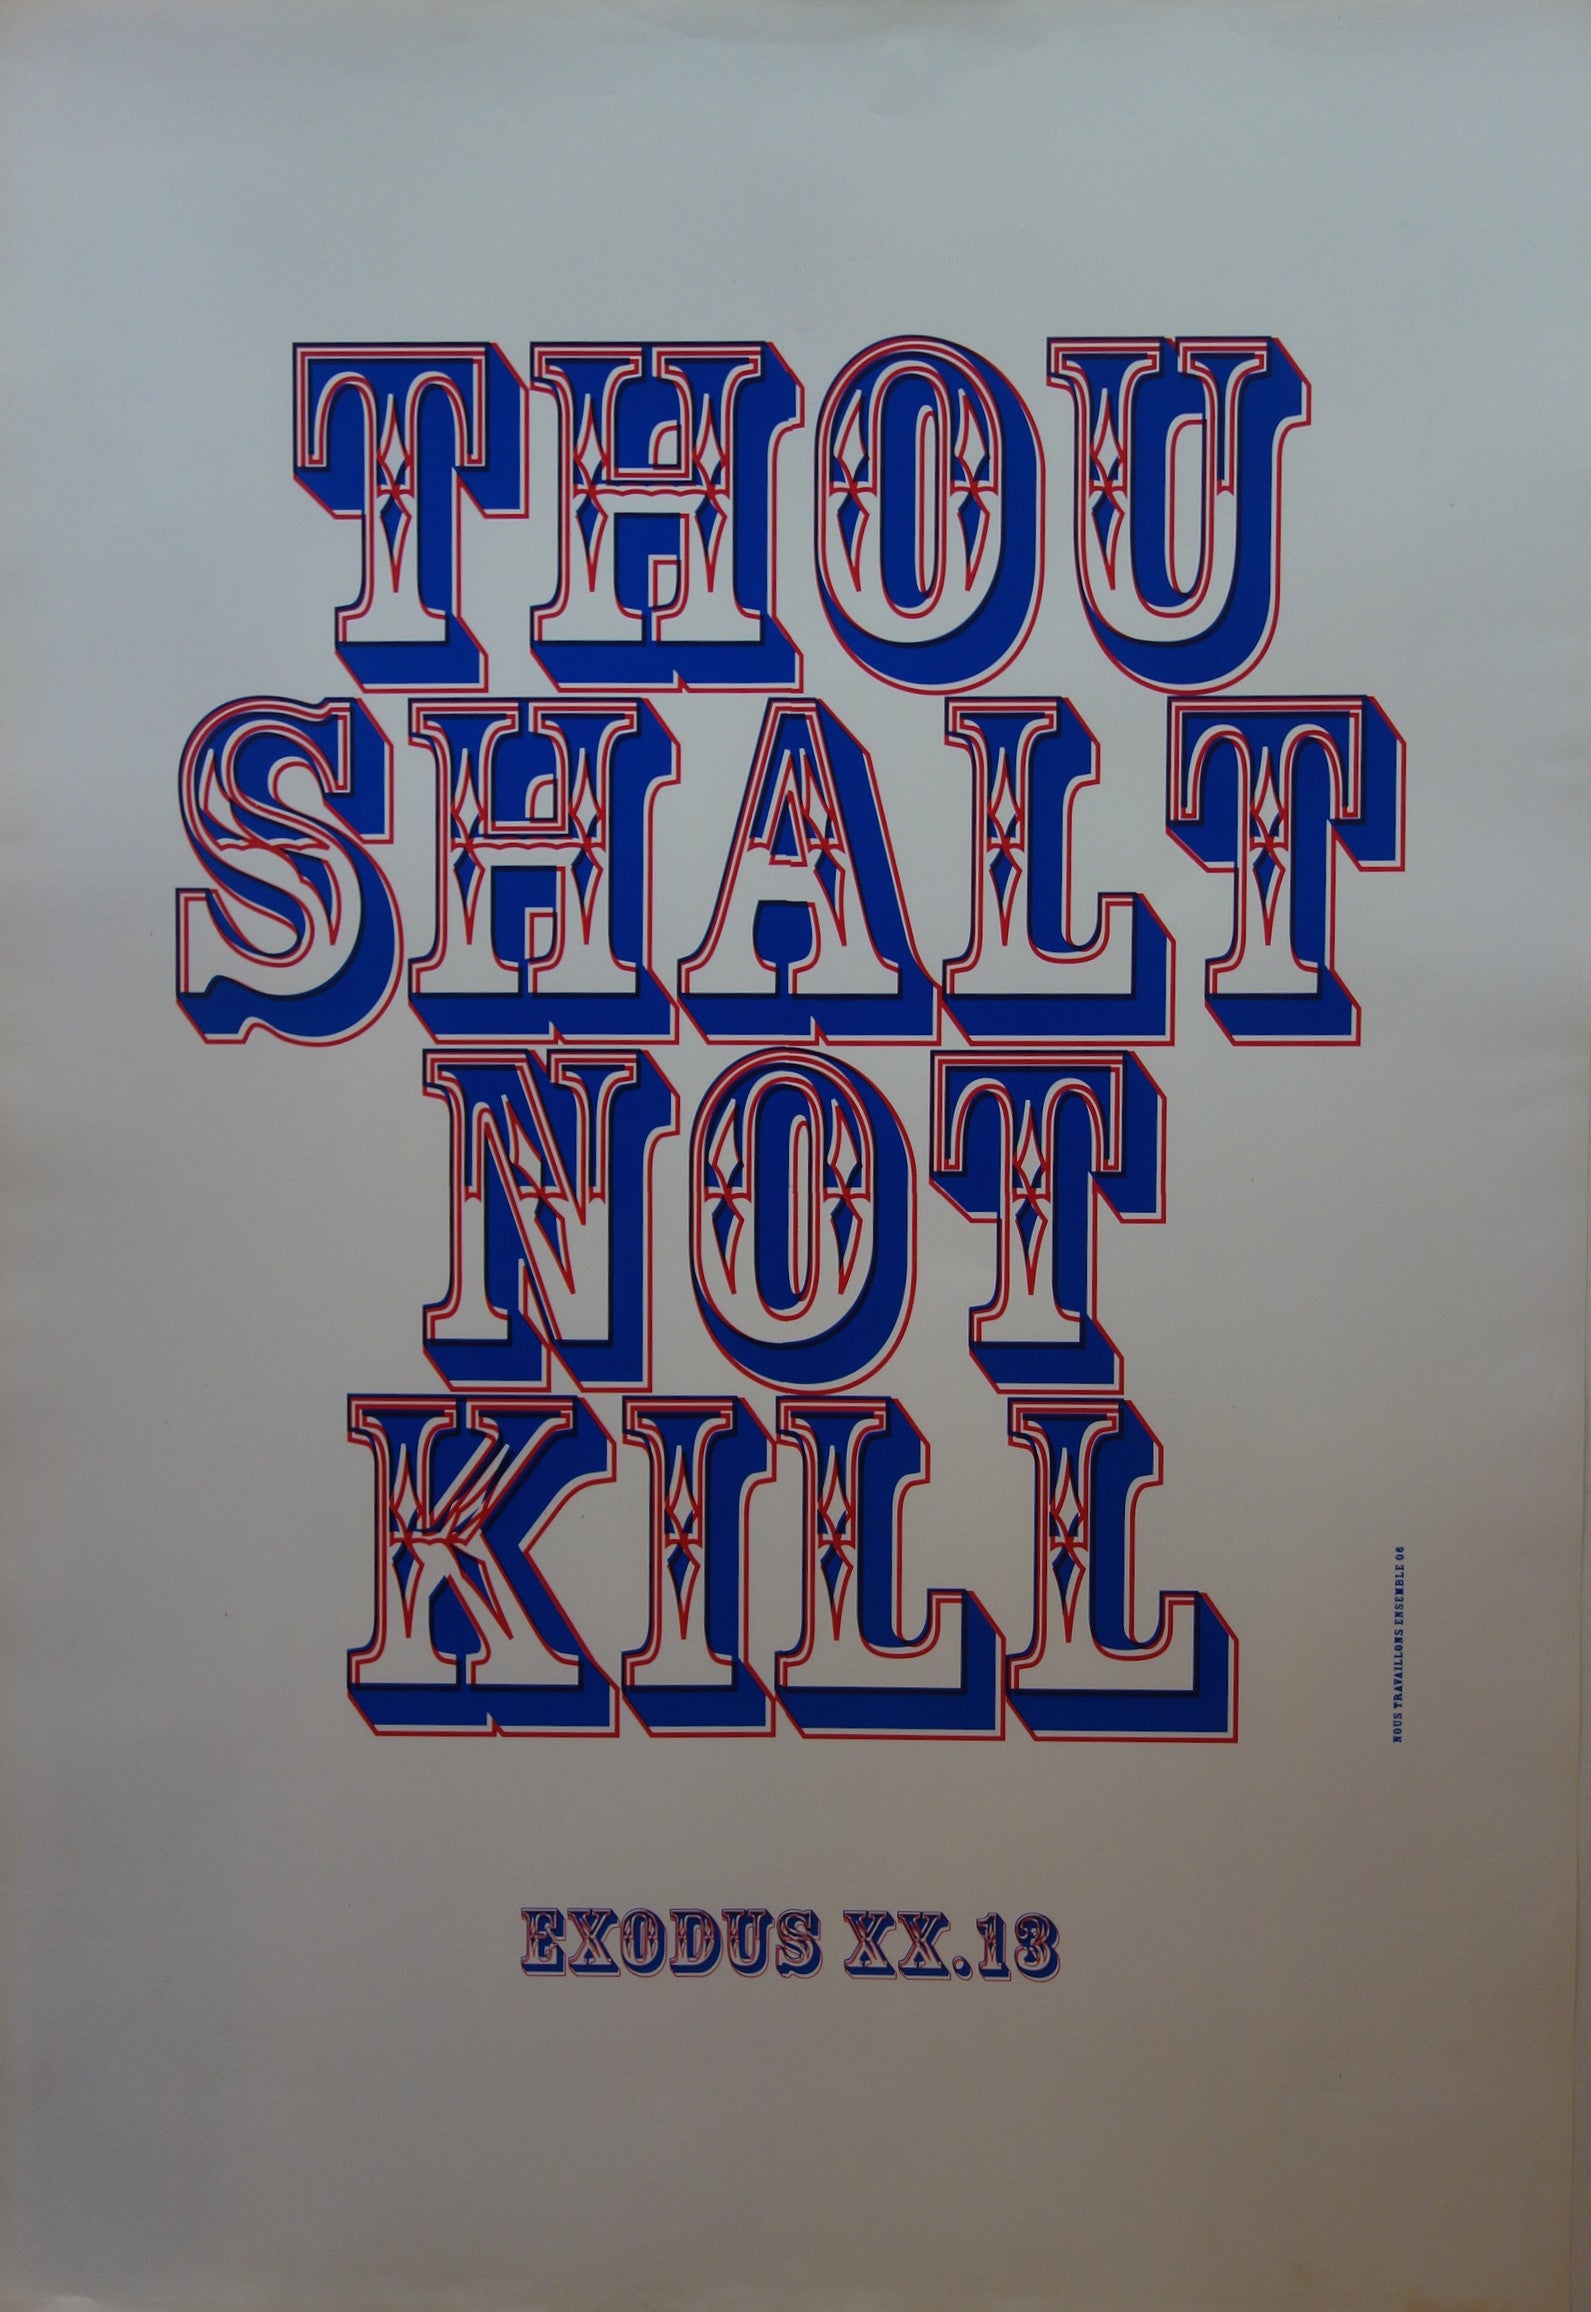 which commandment says thou shalt not kill